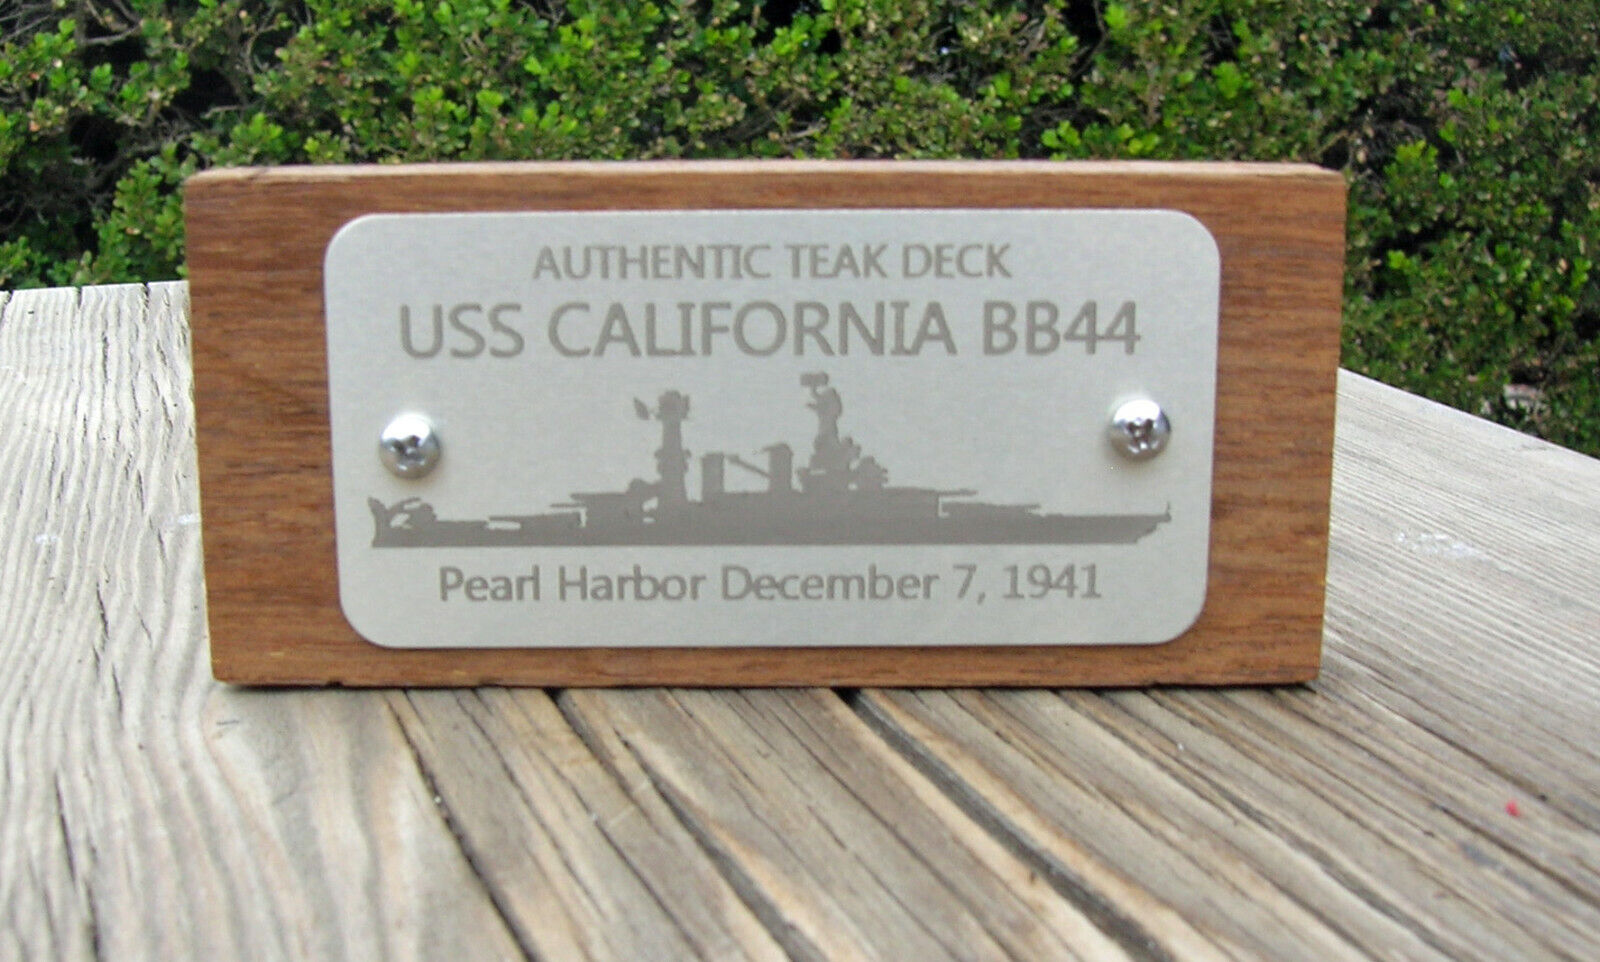 USS California BB44 Authentic Teak Deck US Navy World War Two